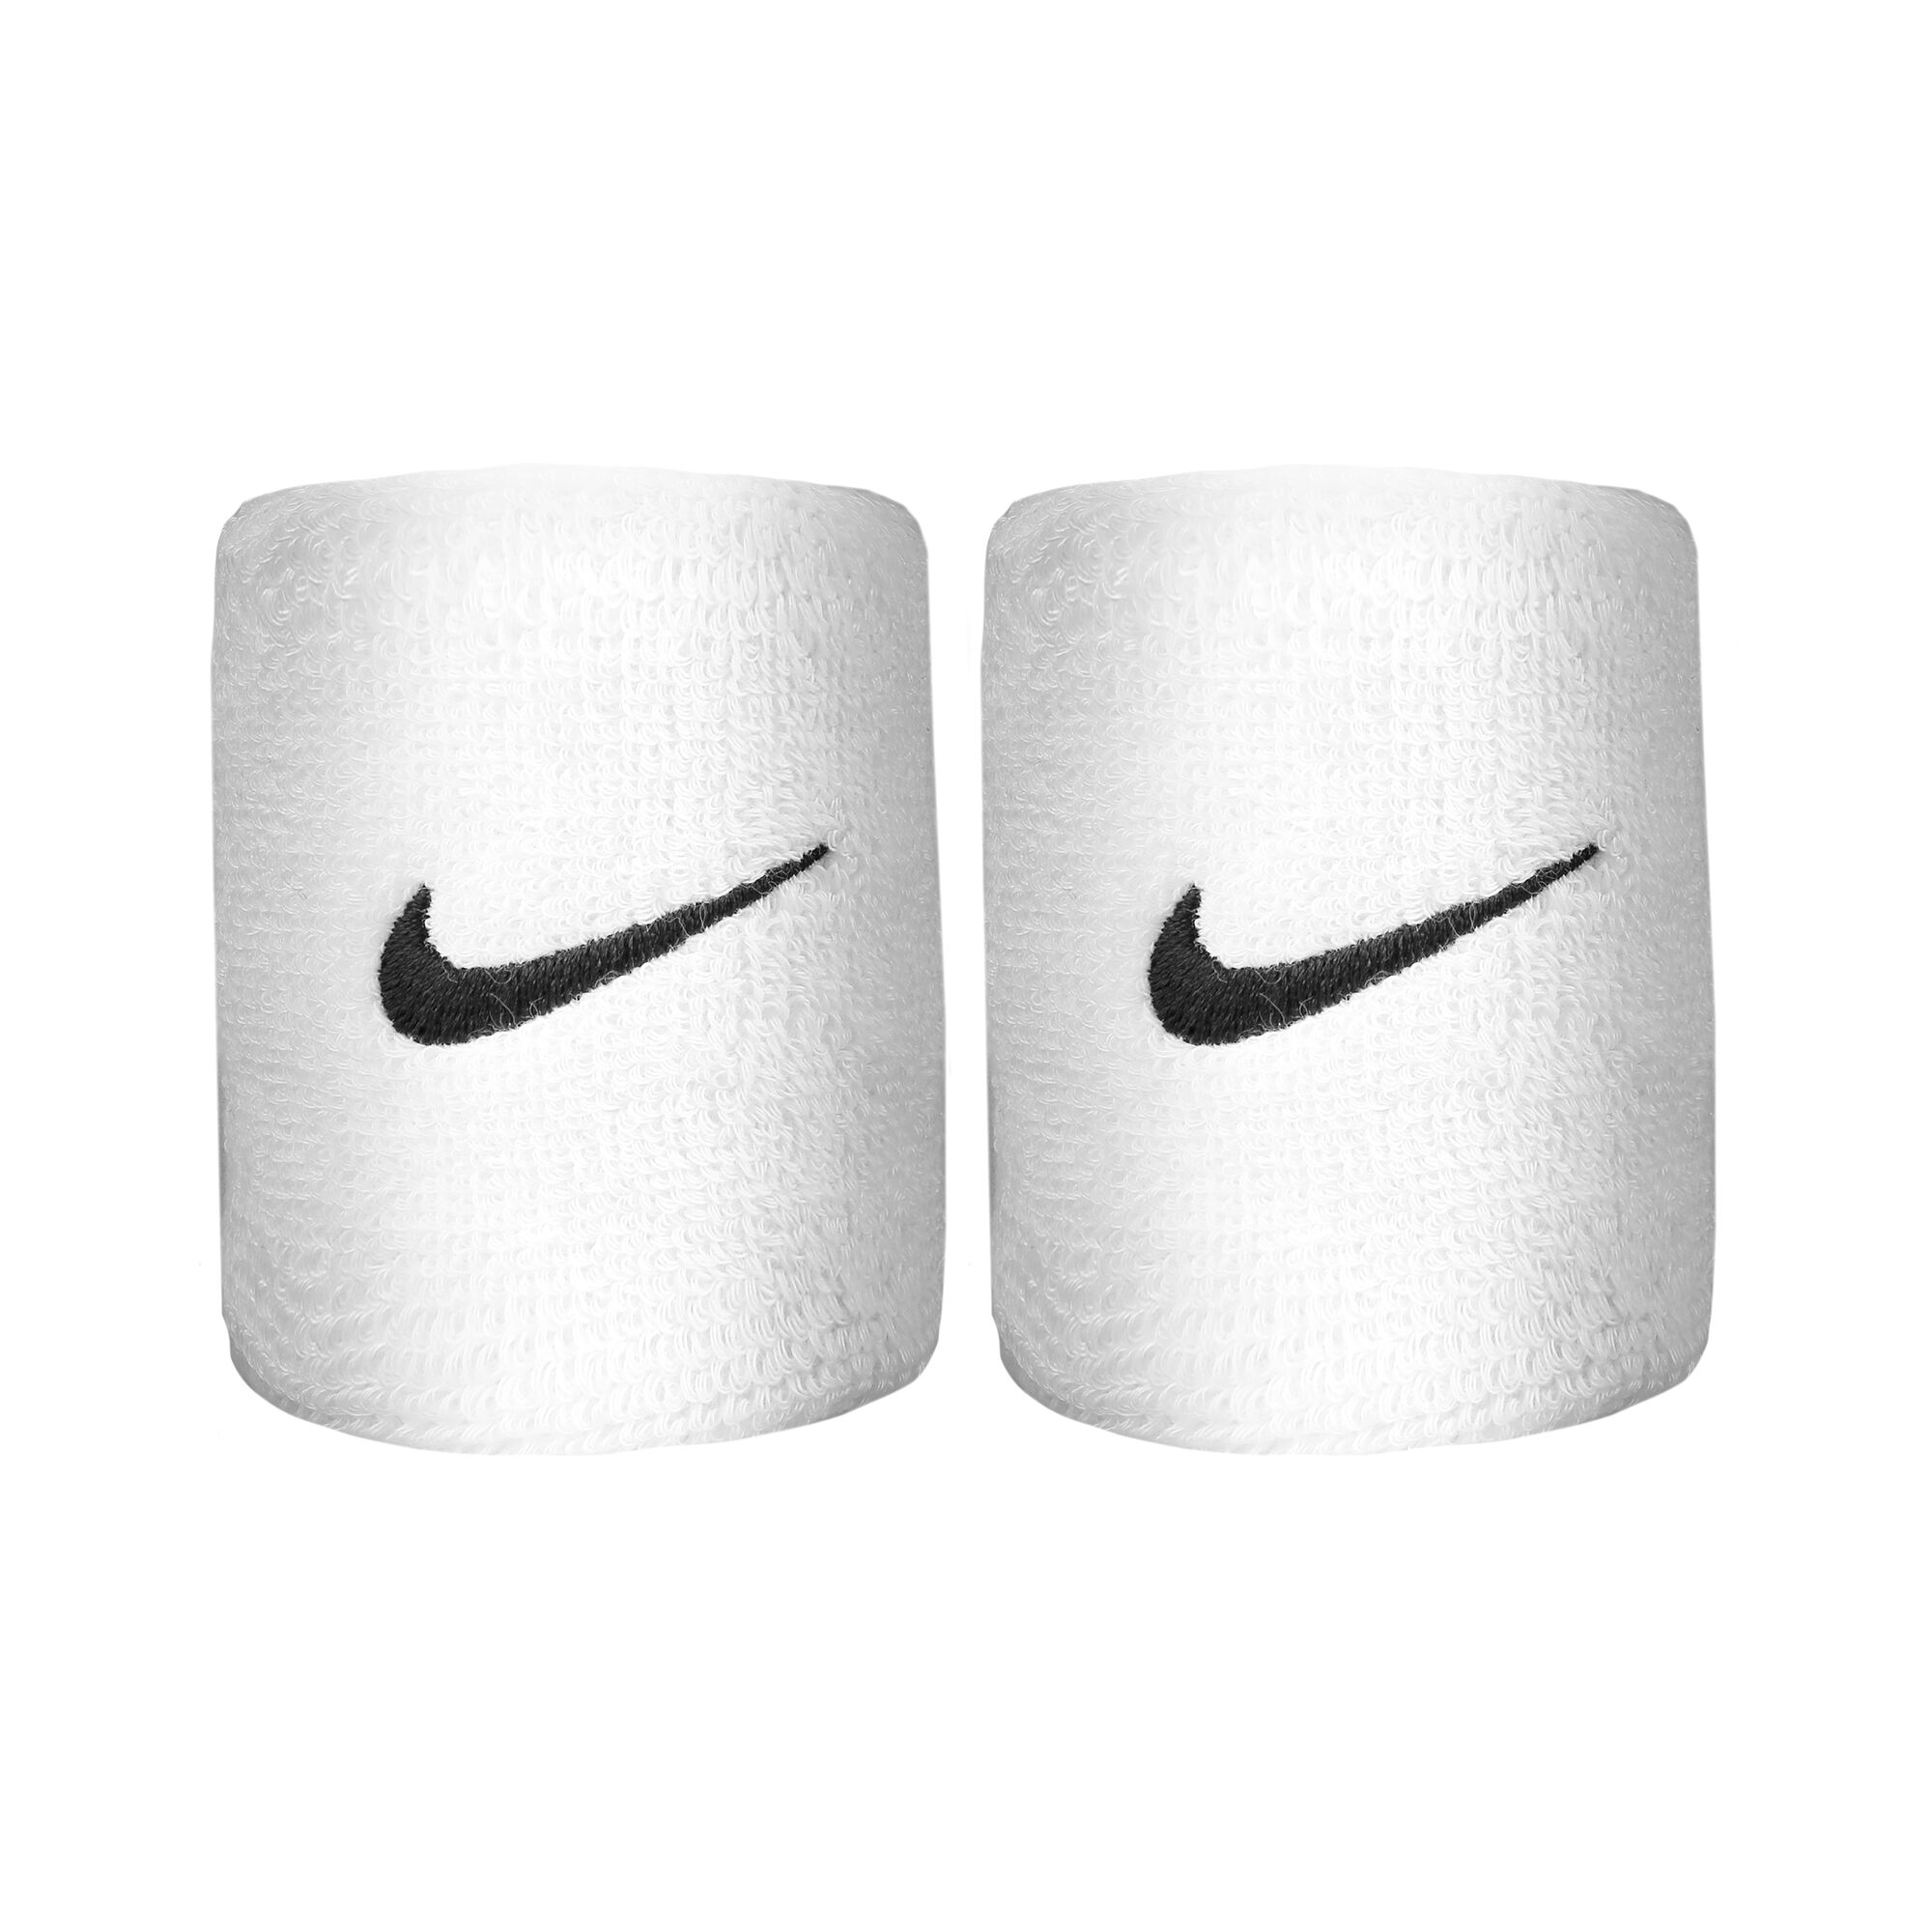 collide Danish Helmet buy Nike Swoosh Wristband 2 Pack - White, Black online | Tennis-Point